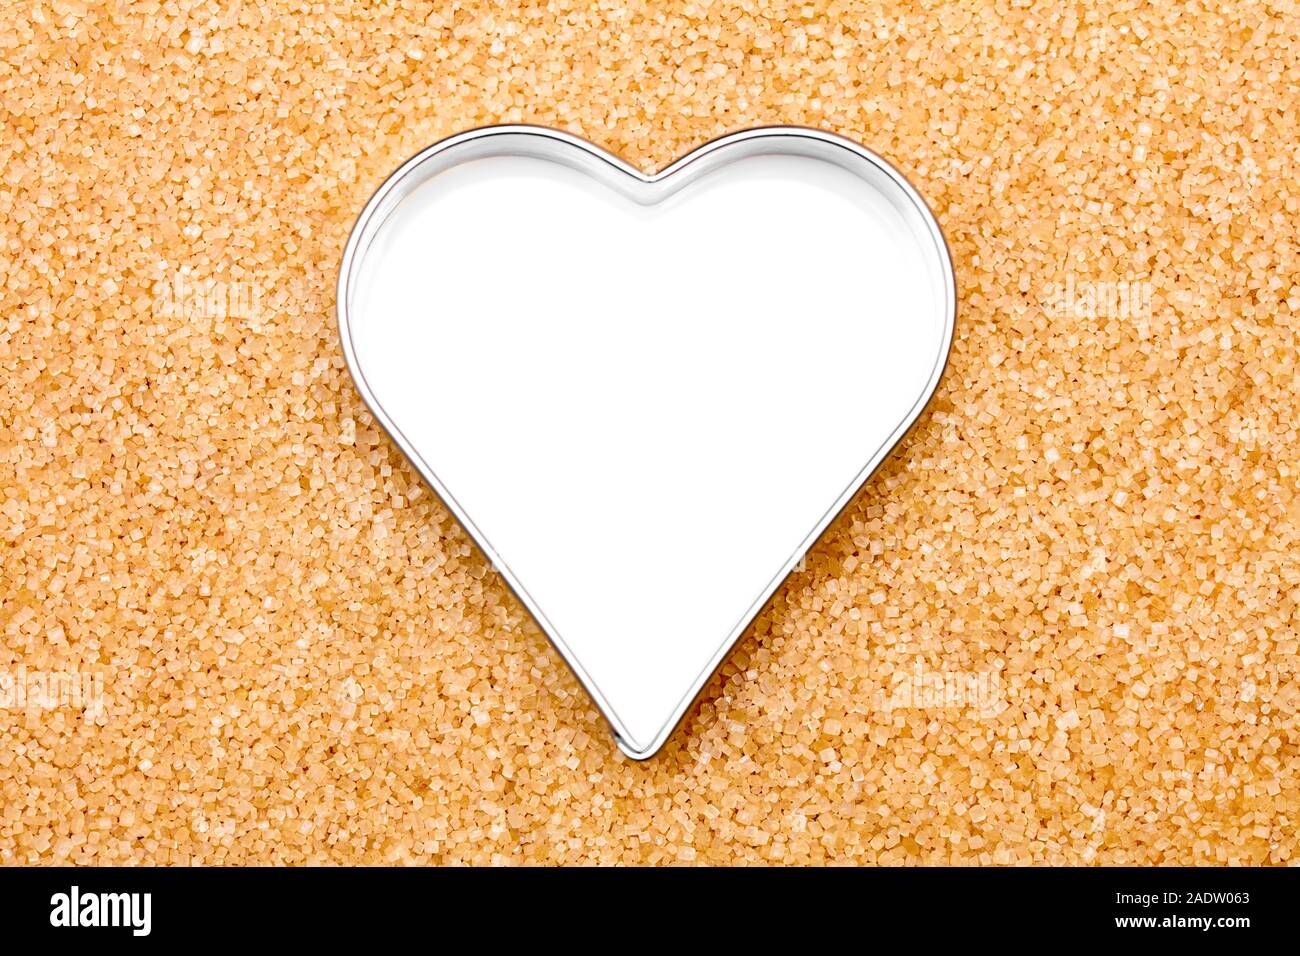 brown sugar or demerara with a white heart, Saccharum officinarum, copyspace Stock Photo